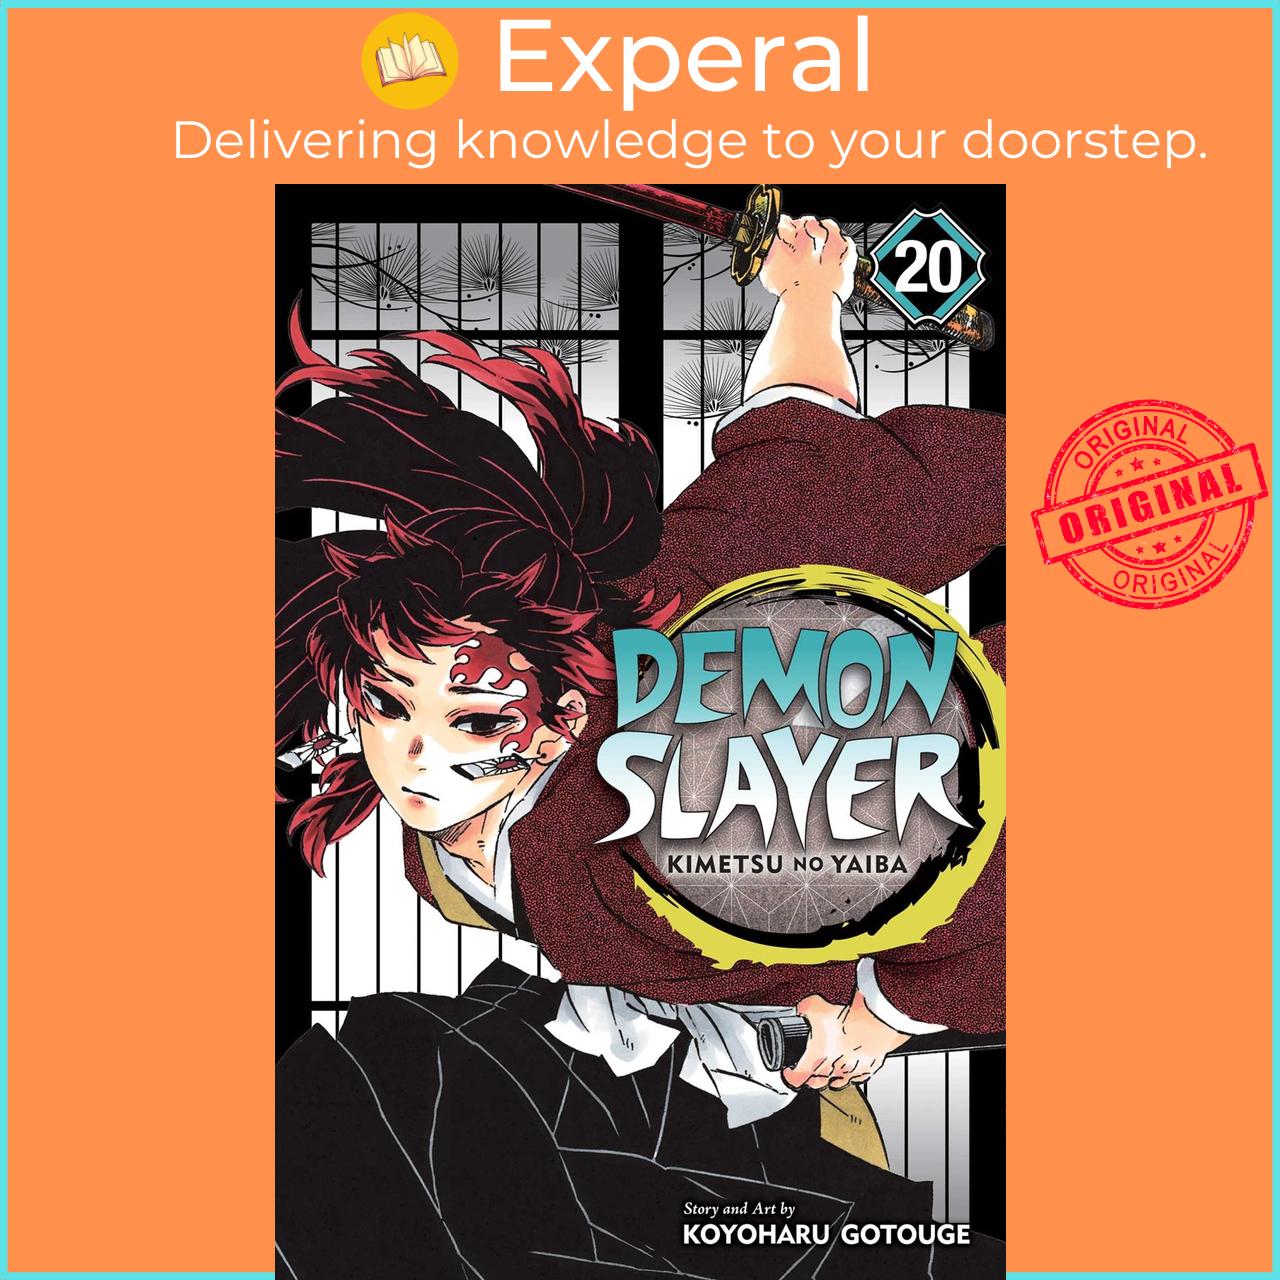 Sách - Demon Slayer: Kimetsu no Yaiba, Vol. 20 by Koyoharu Gotouge (US edition, paperback)